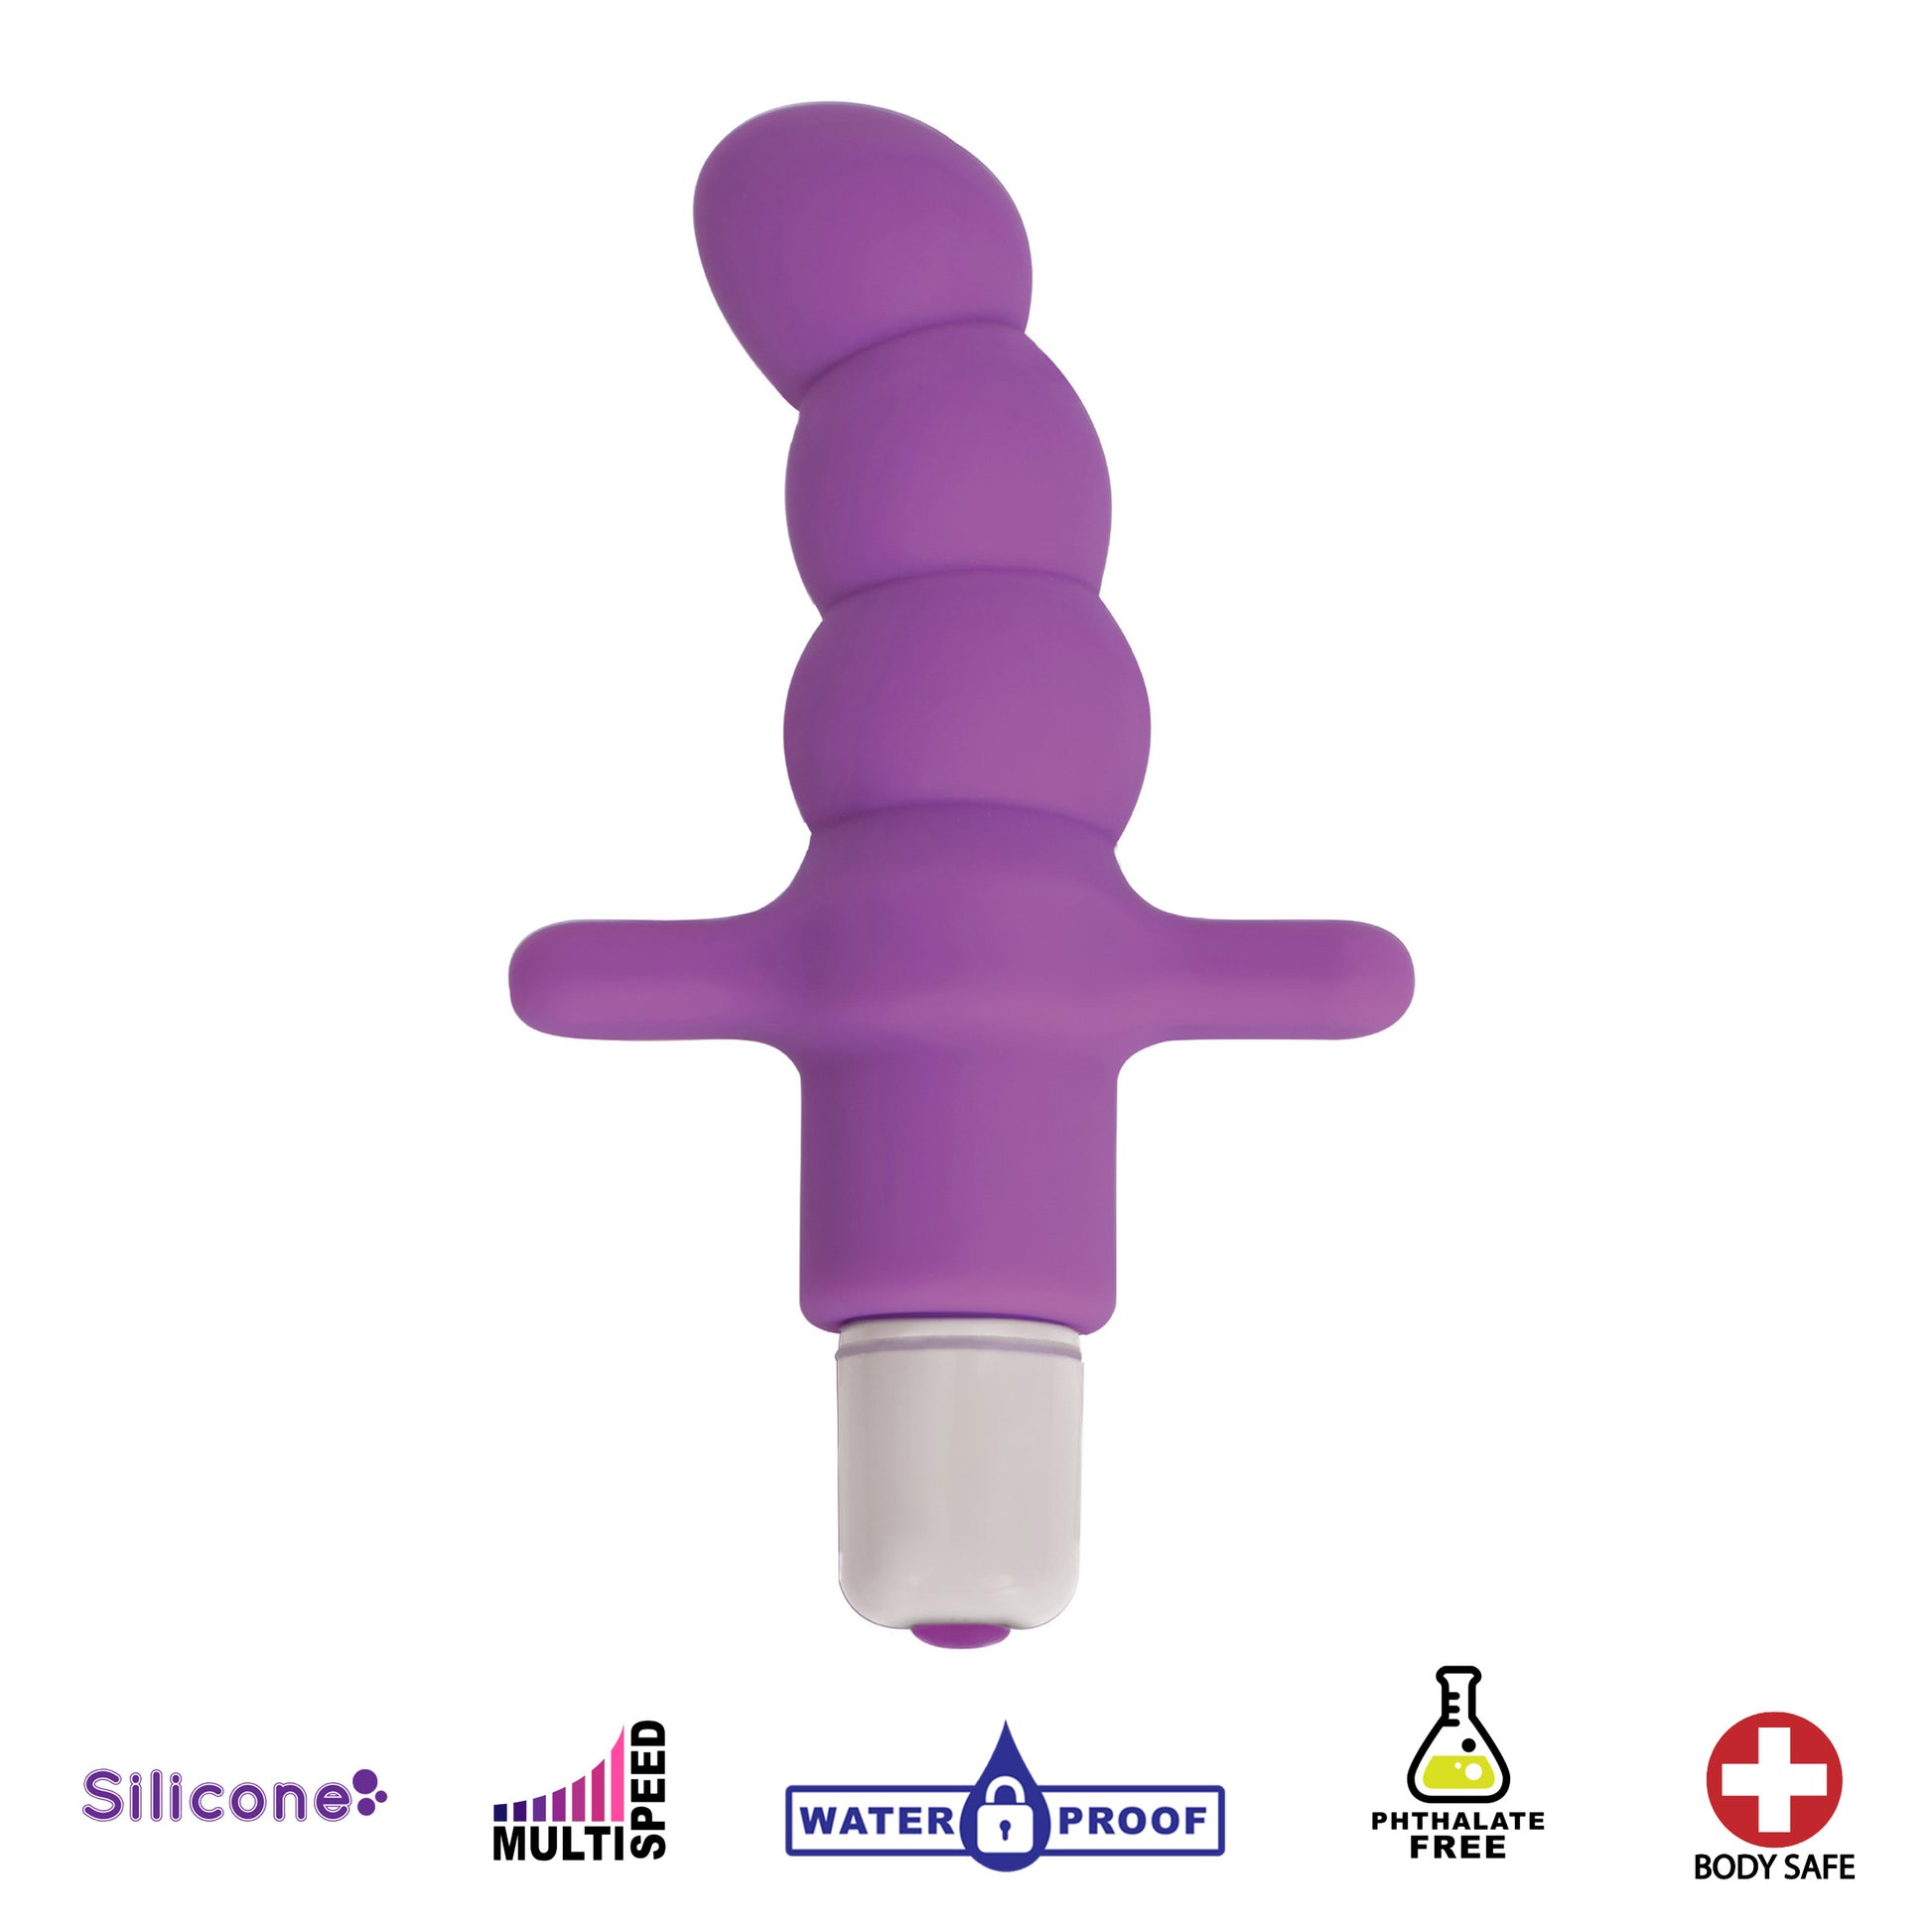 Desire Silicone Vibrating Anal Probe- Purple - UABDSM